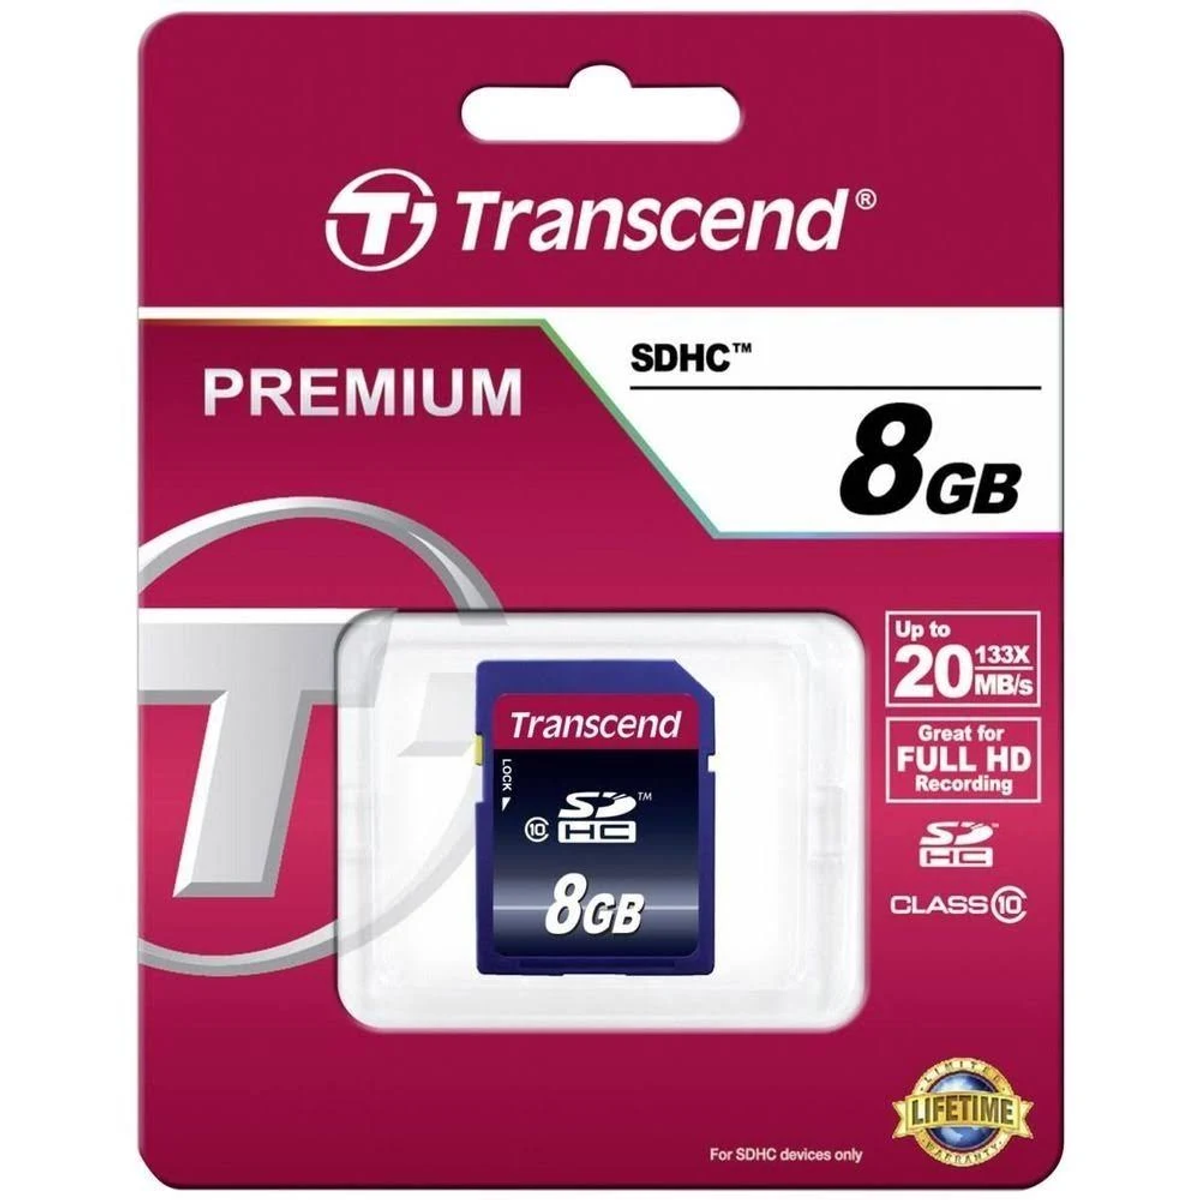 19 MB/s TRANSCEND GB, 8 SDHC, SD m0000B2L7Y, Speicherkarte, Micro-SDHC,